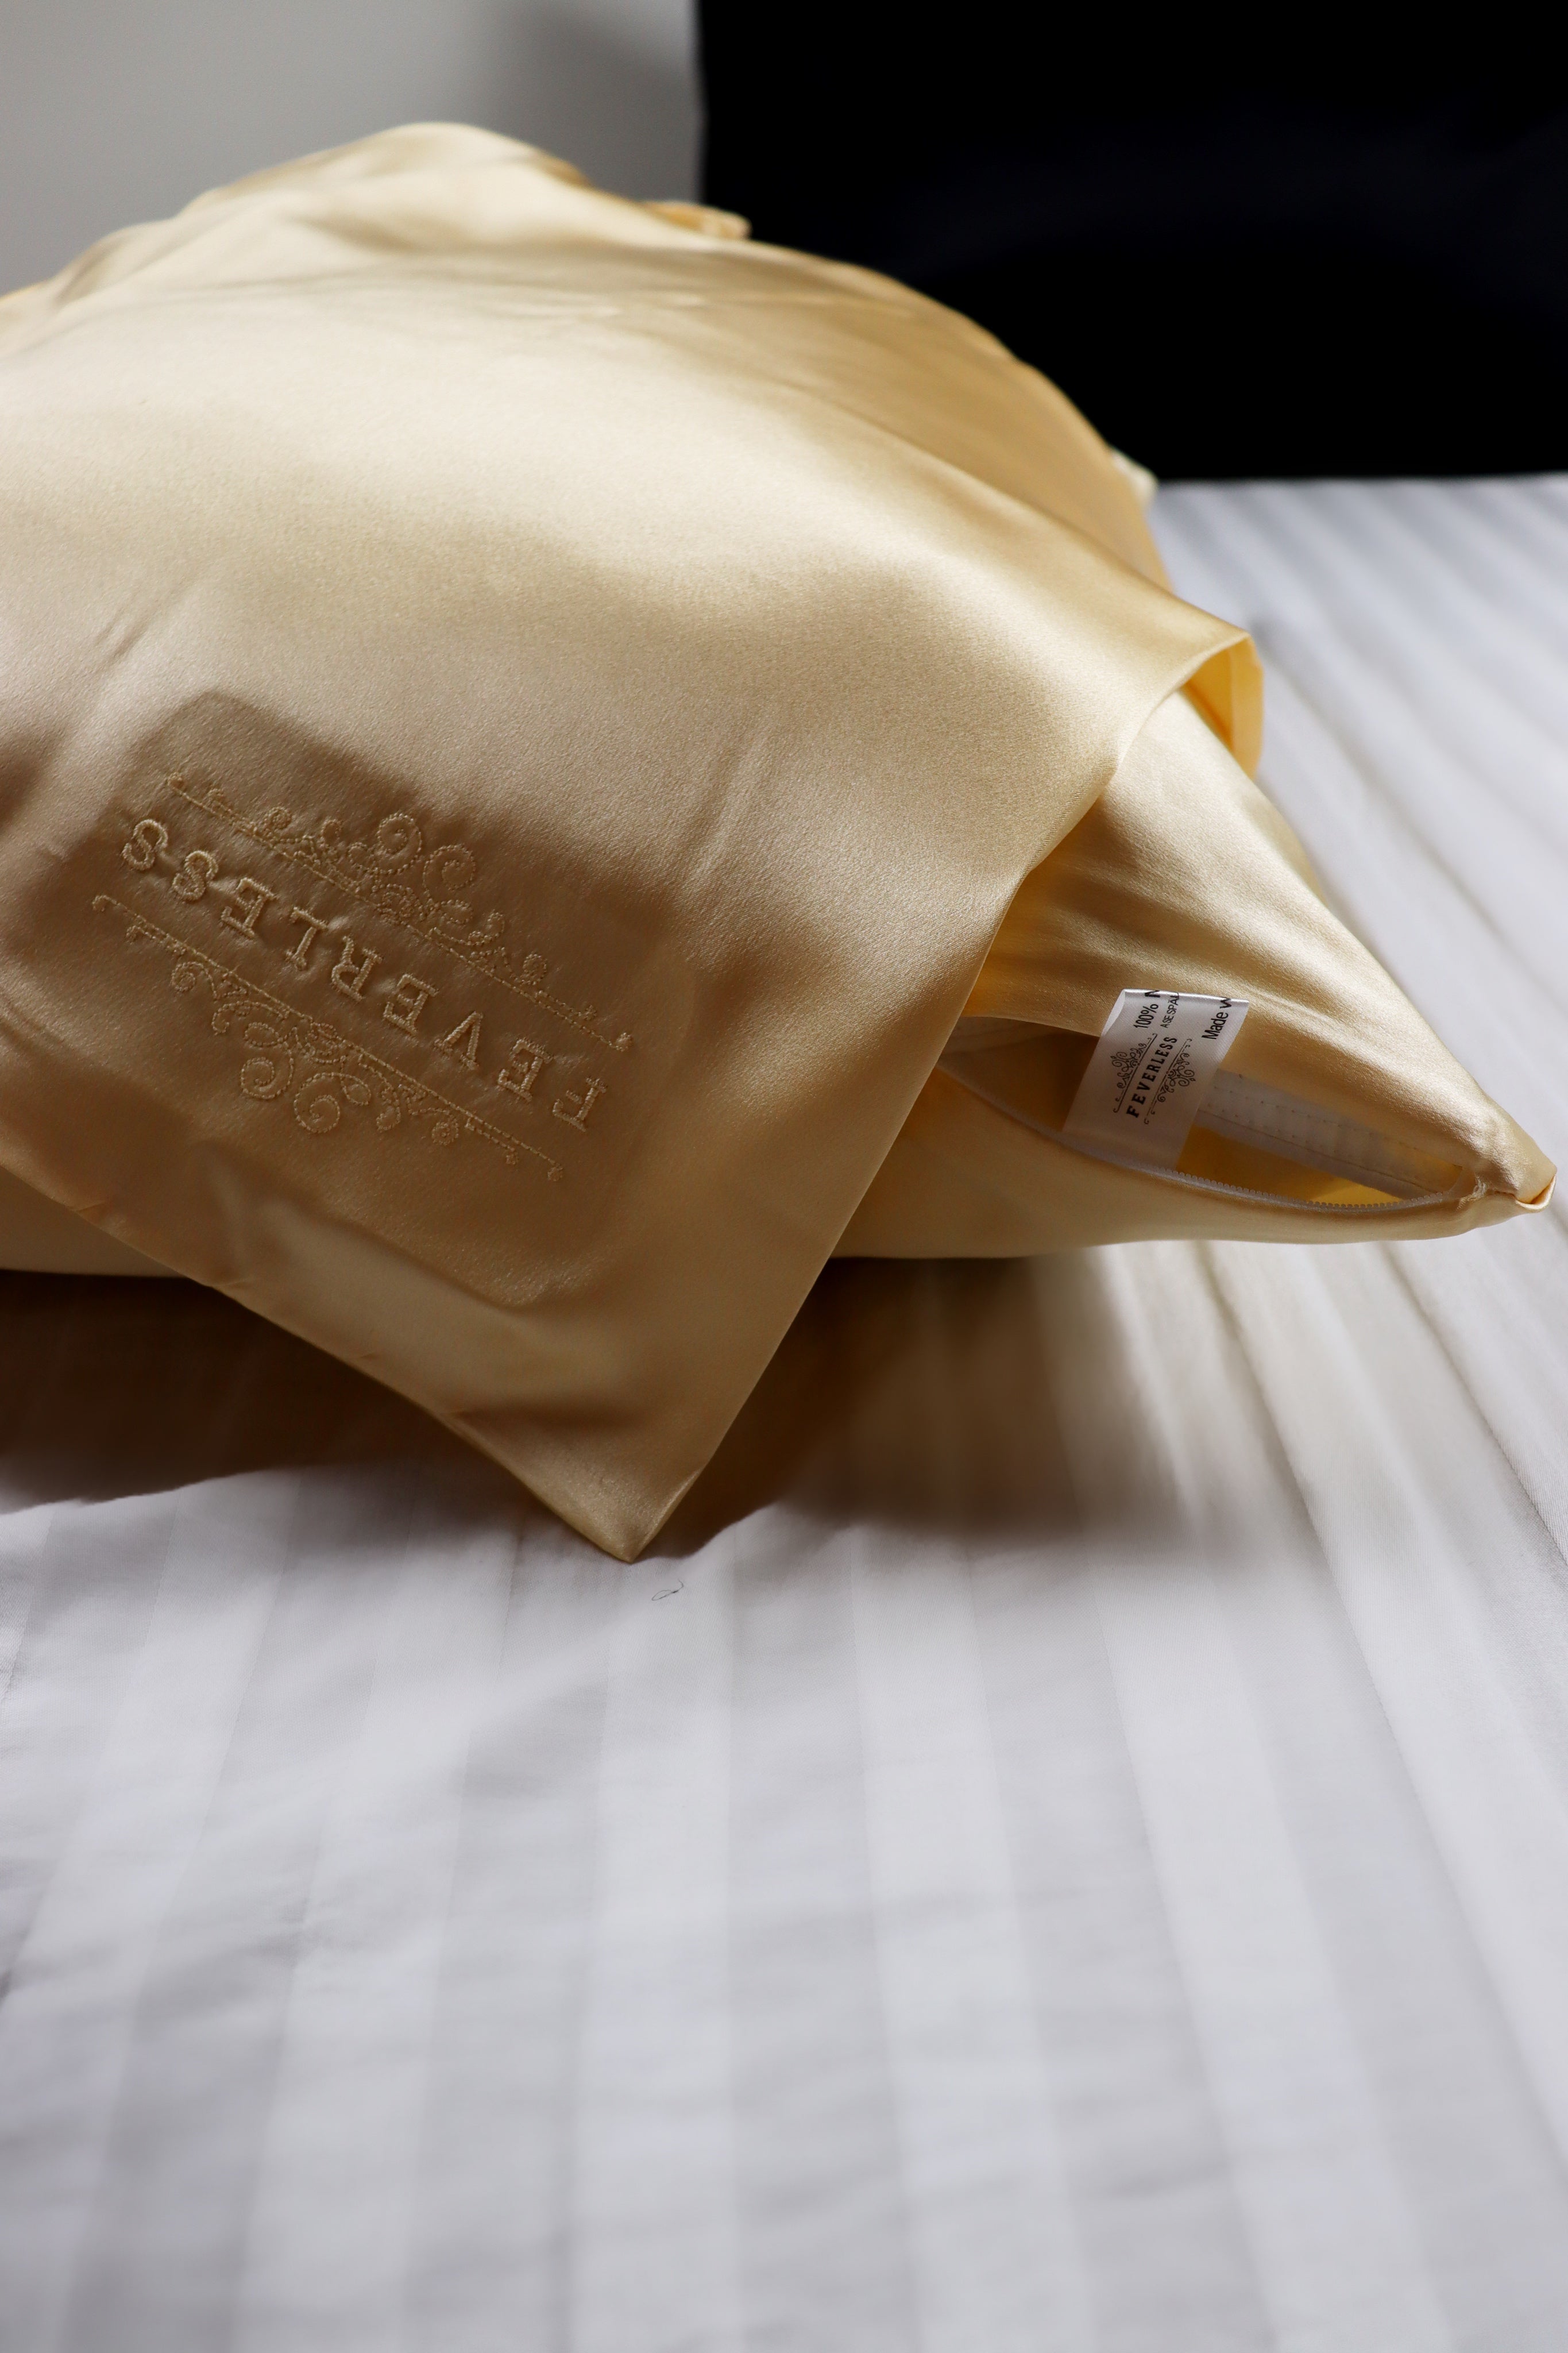 Glowing Hair & Skin SET - STANDARD Size Curling Kit + 1 FeverLess Pillowcase in Golden Natural Silk